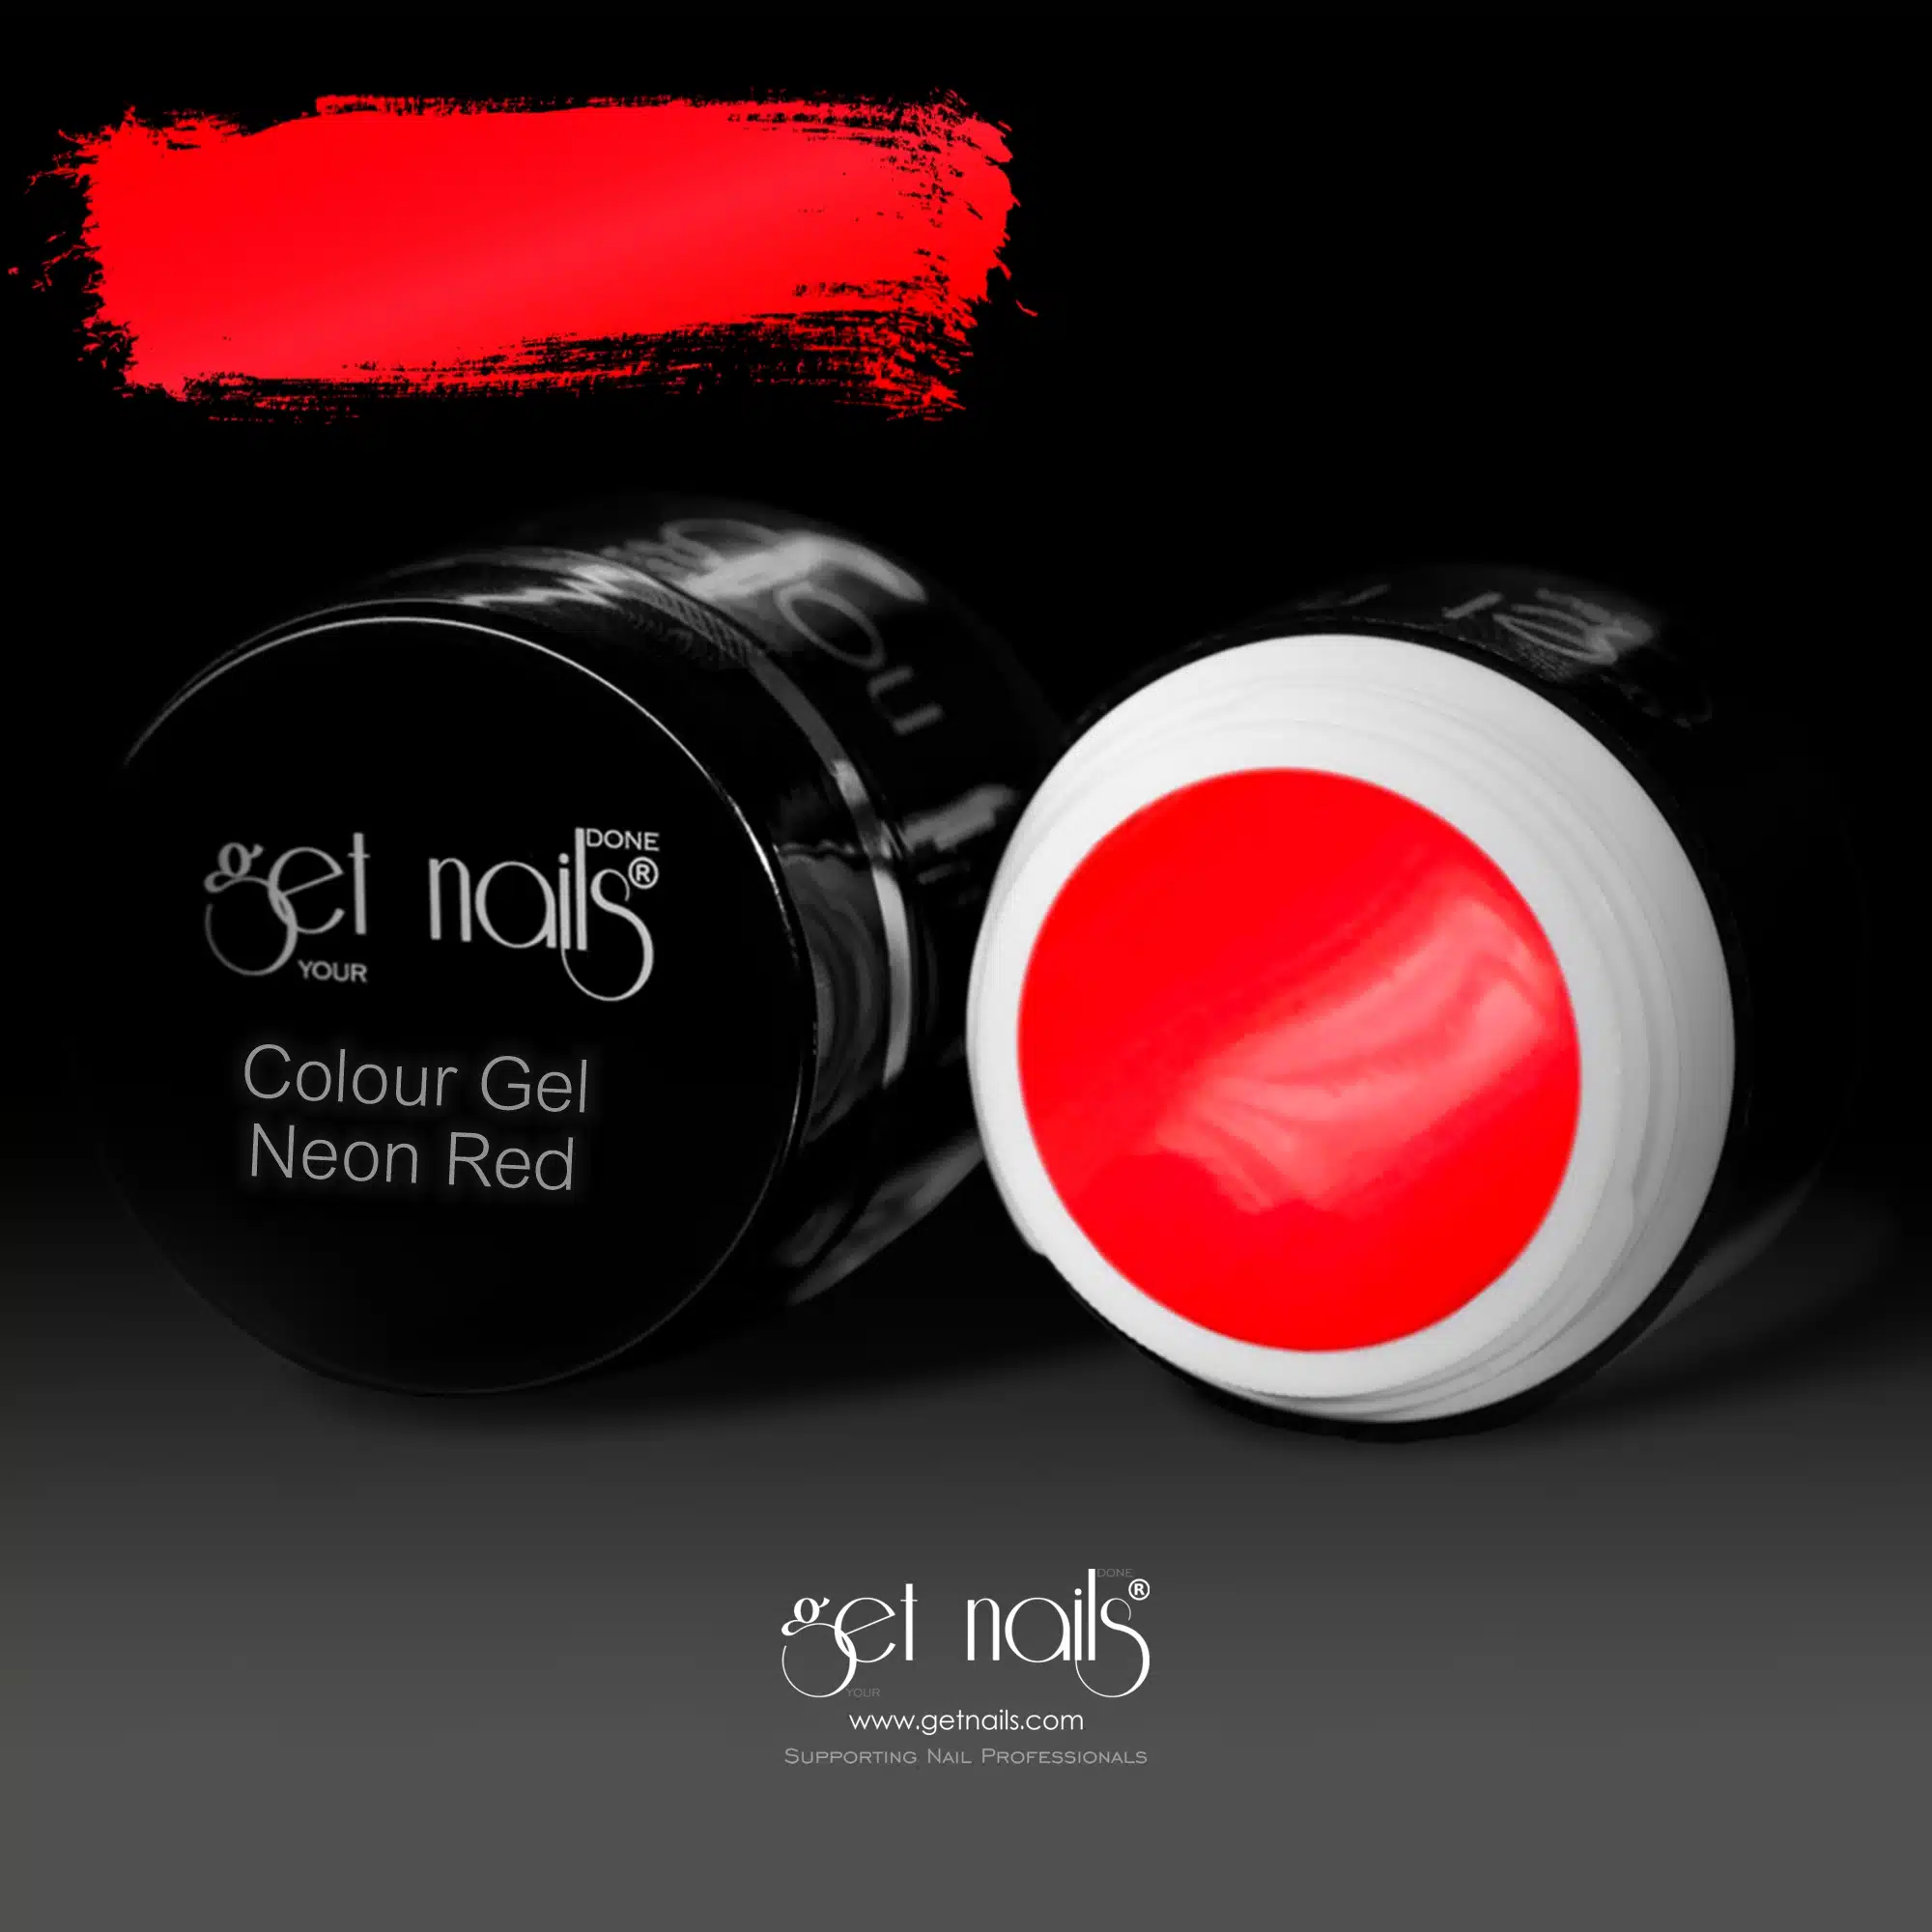 Get Nails Austria - Colour Gel Neon Red 5g